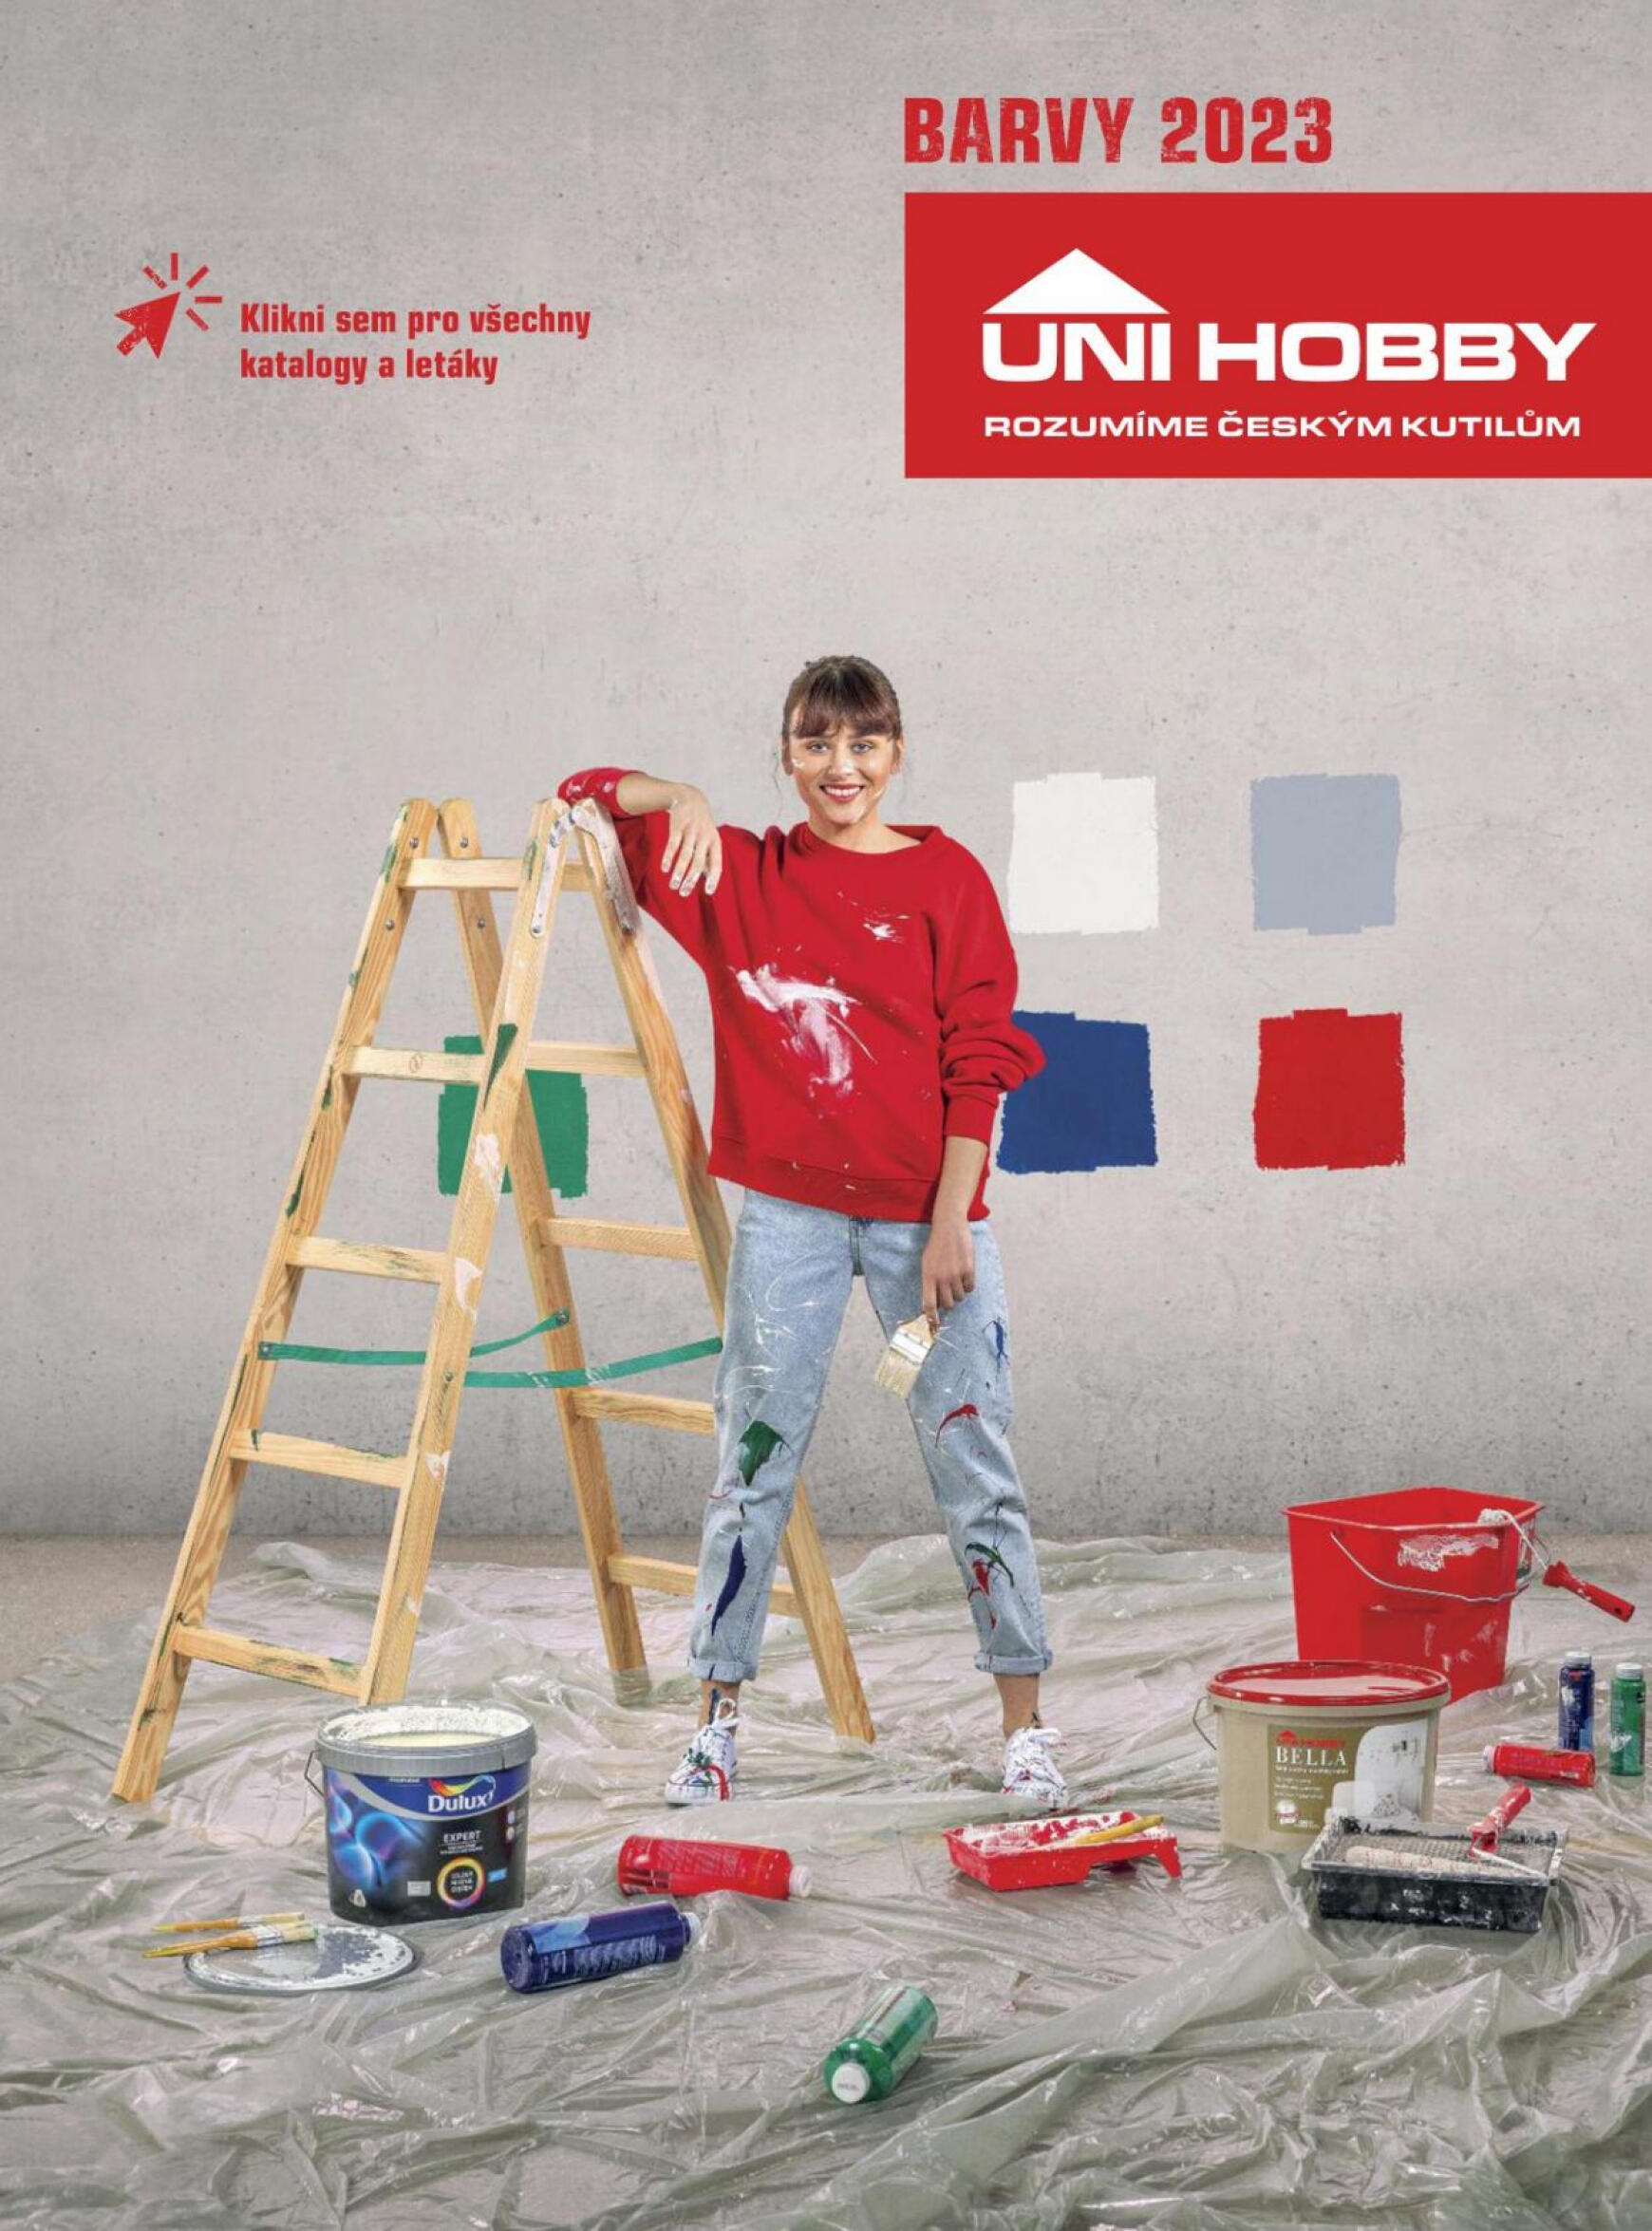 uni-hobby - UNI HOBBY Katalog barev 2023 platný od 22.05.2023 - page: 1